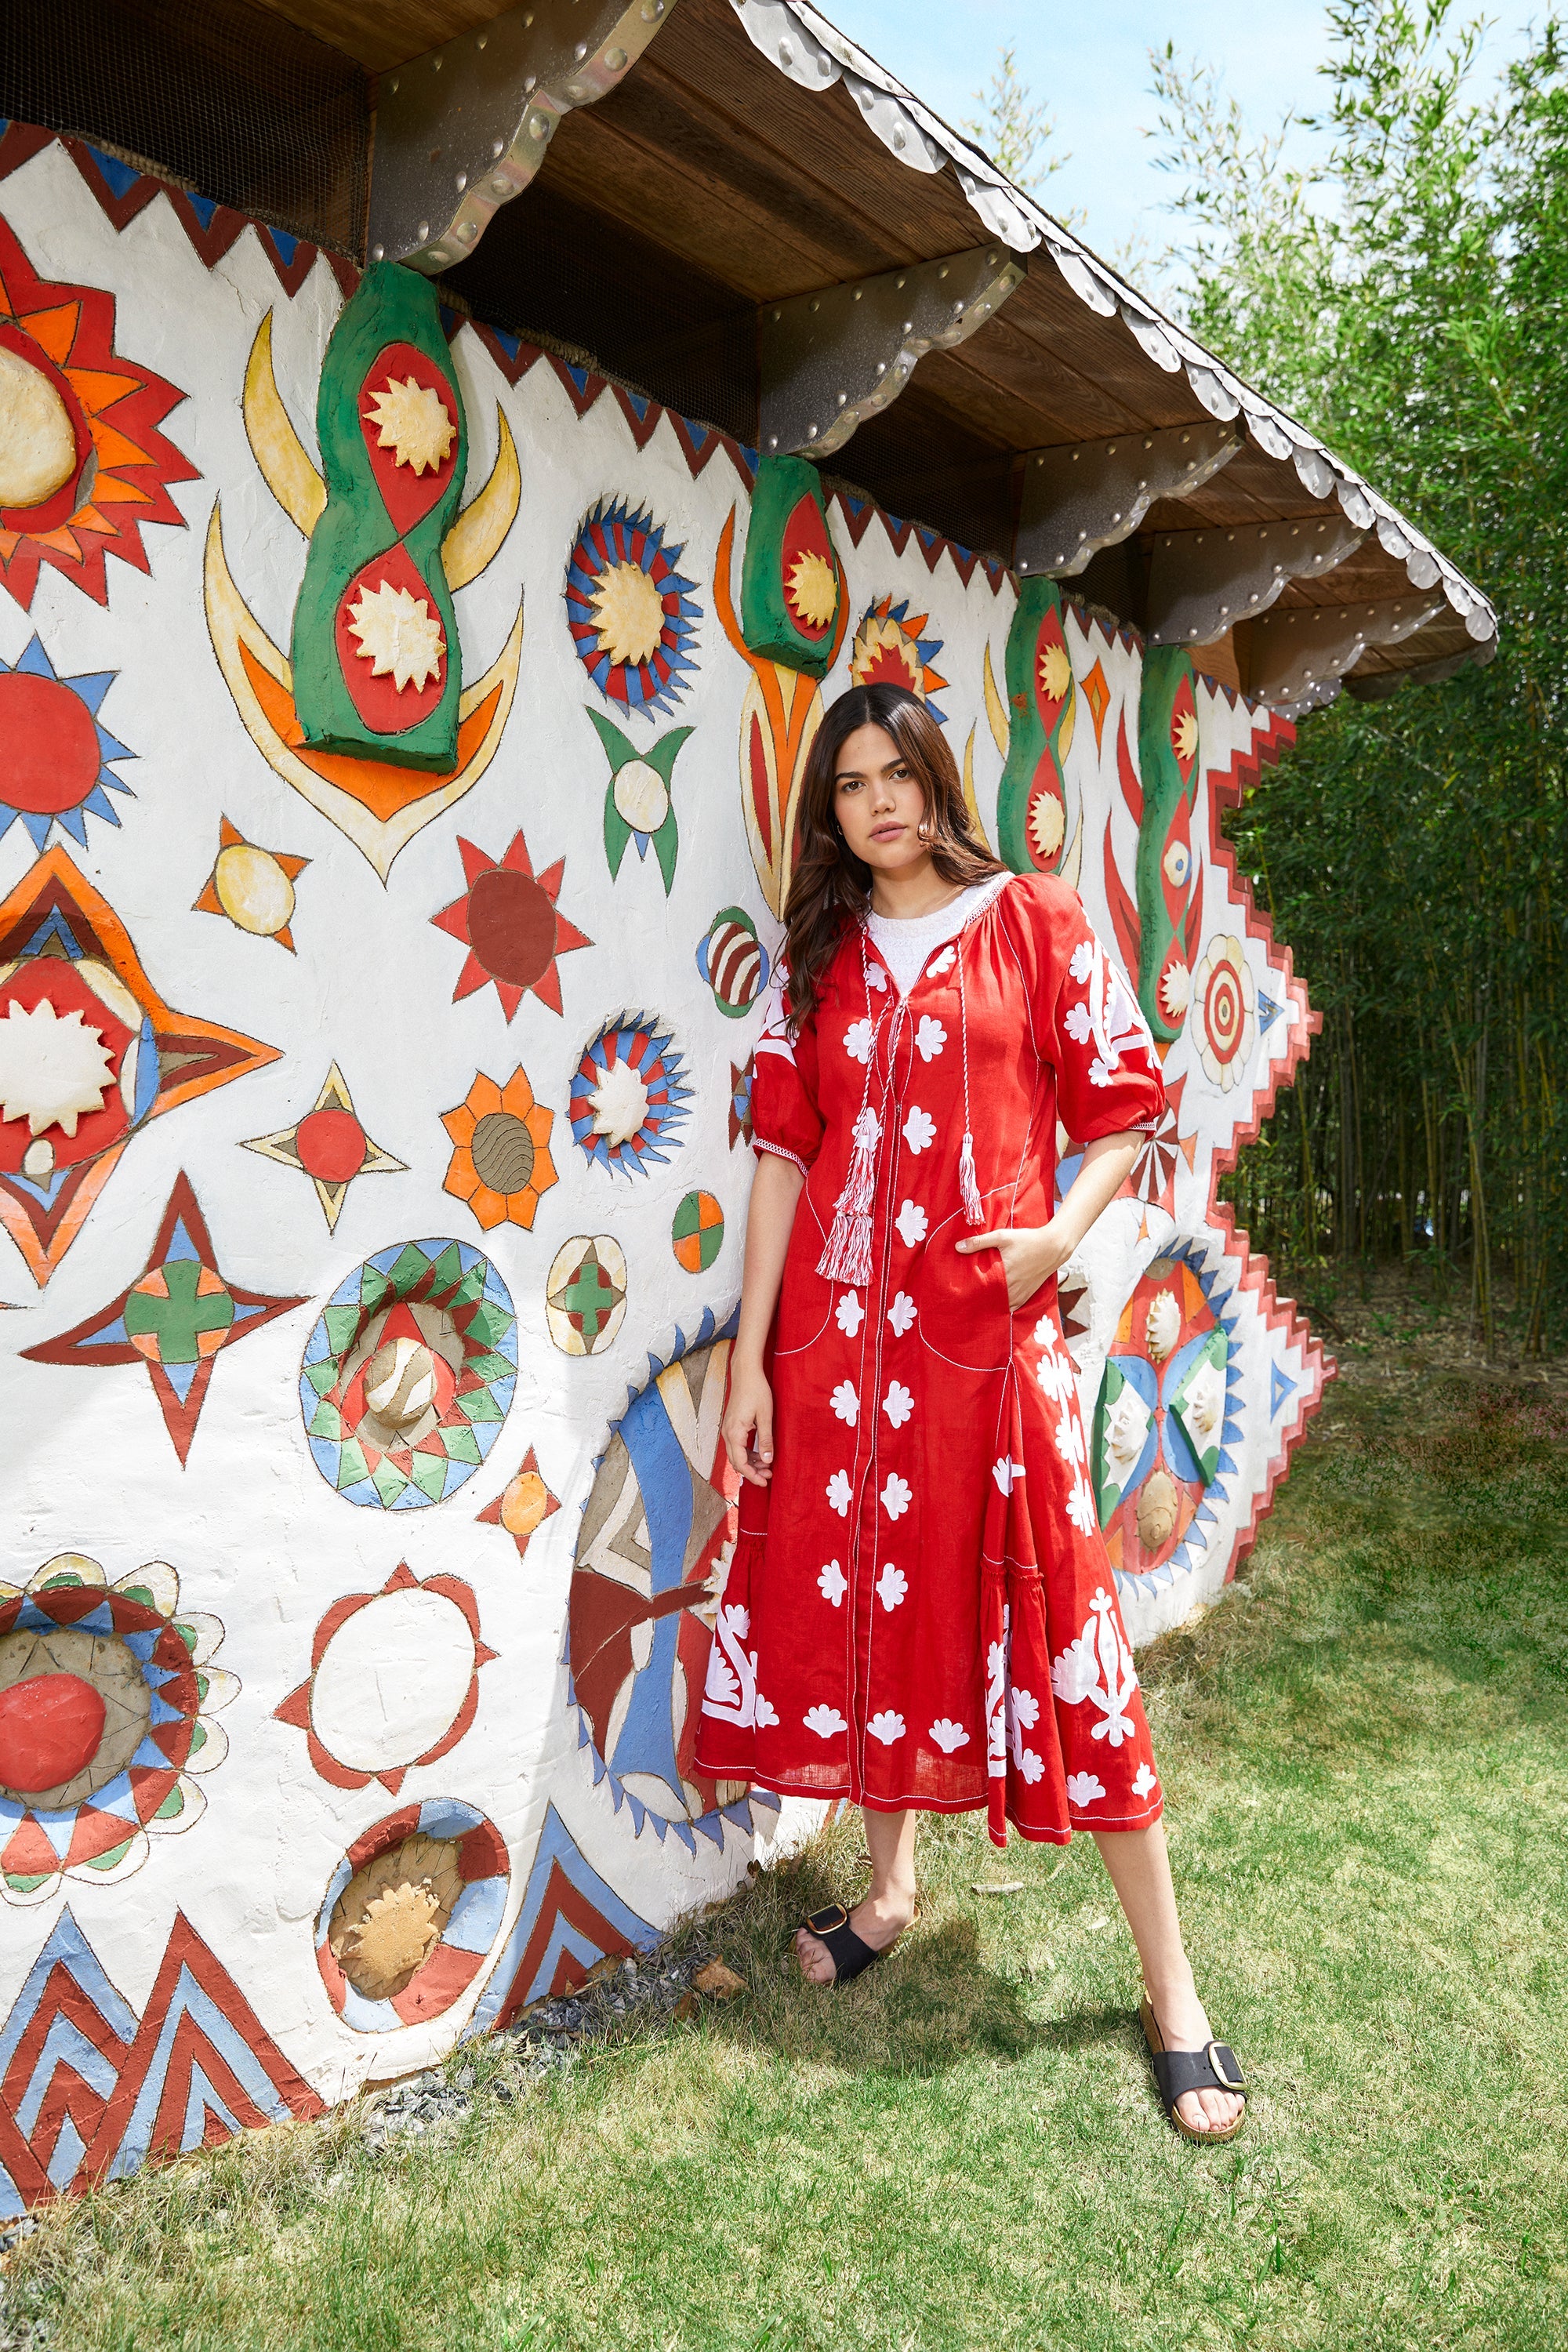 Matisse Embroidered Ukrainian Dress / Caftan  - Red, White by Larkin Lane